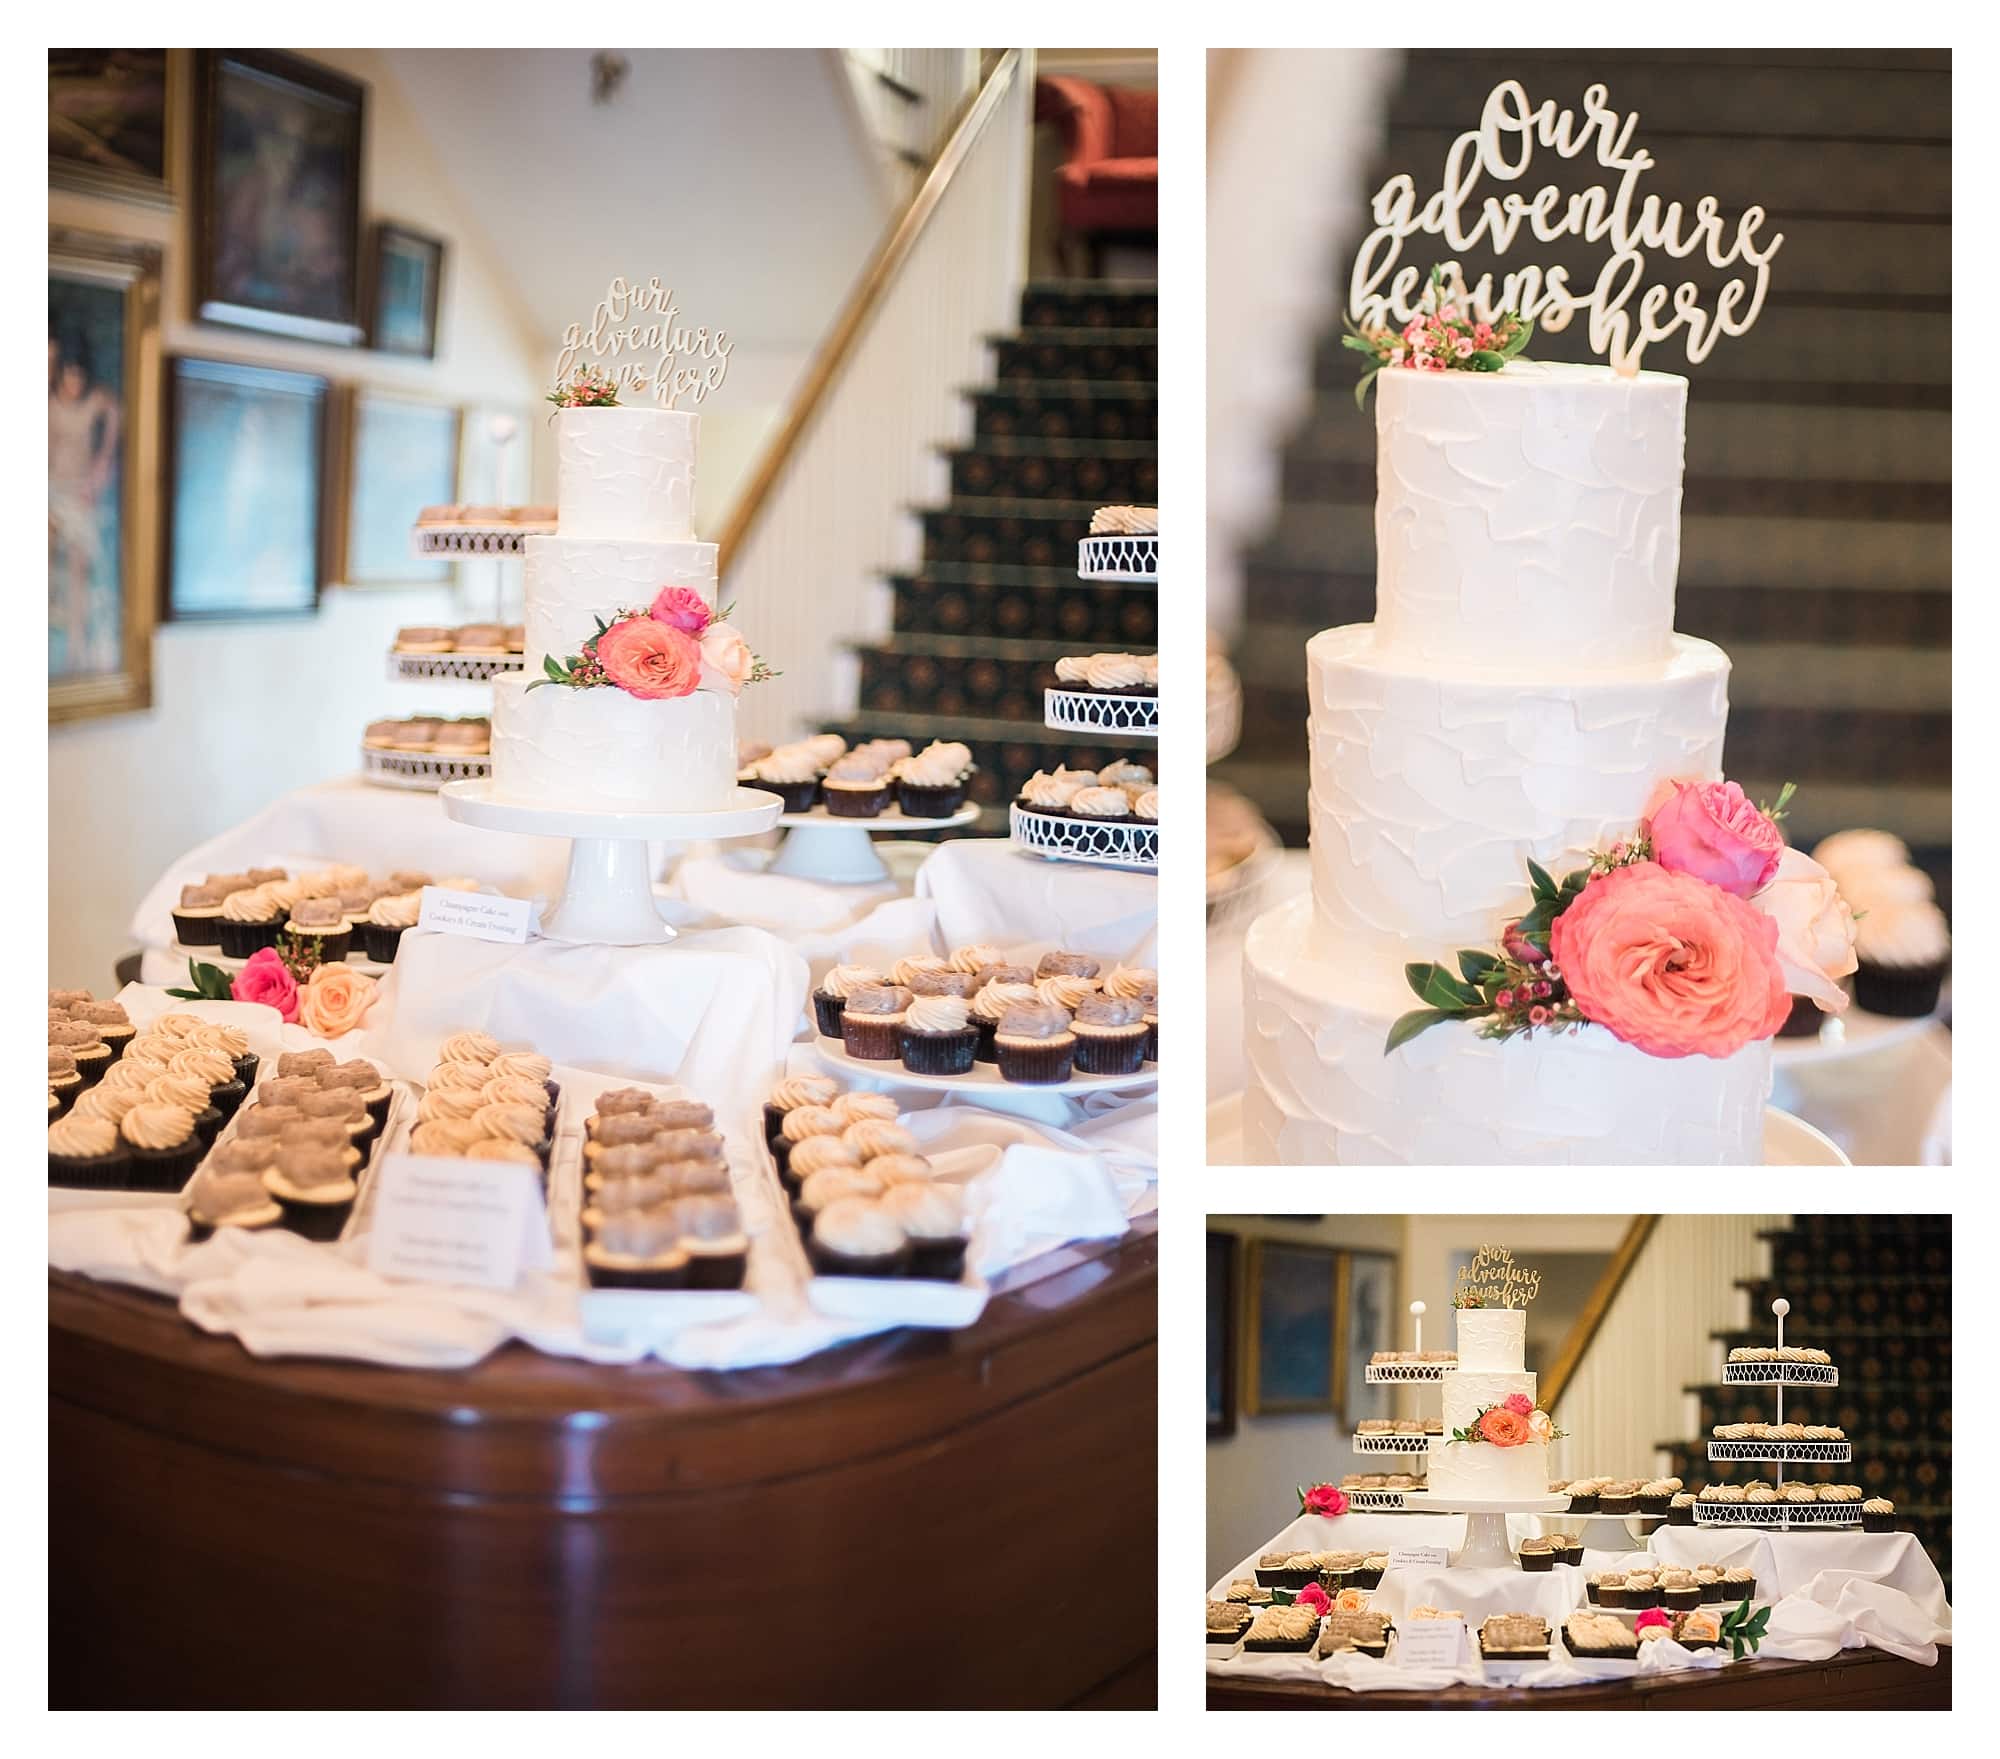 Mini cupcakes and wedding cake on piano display